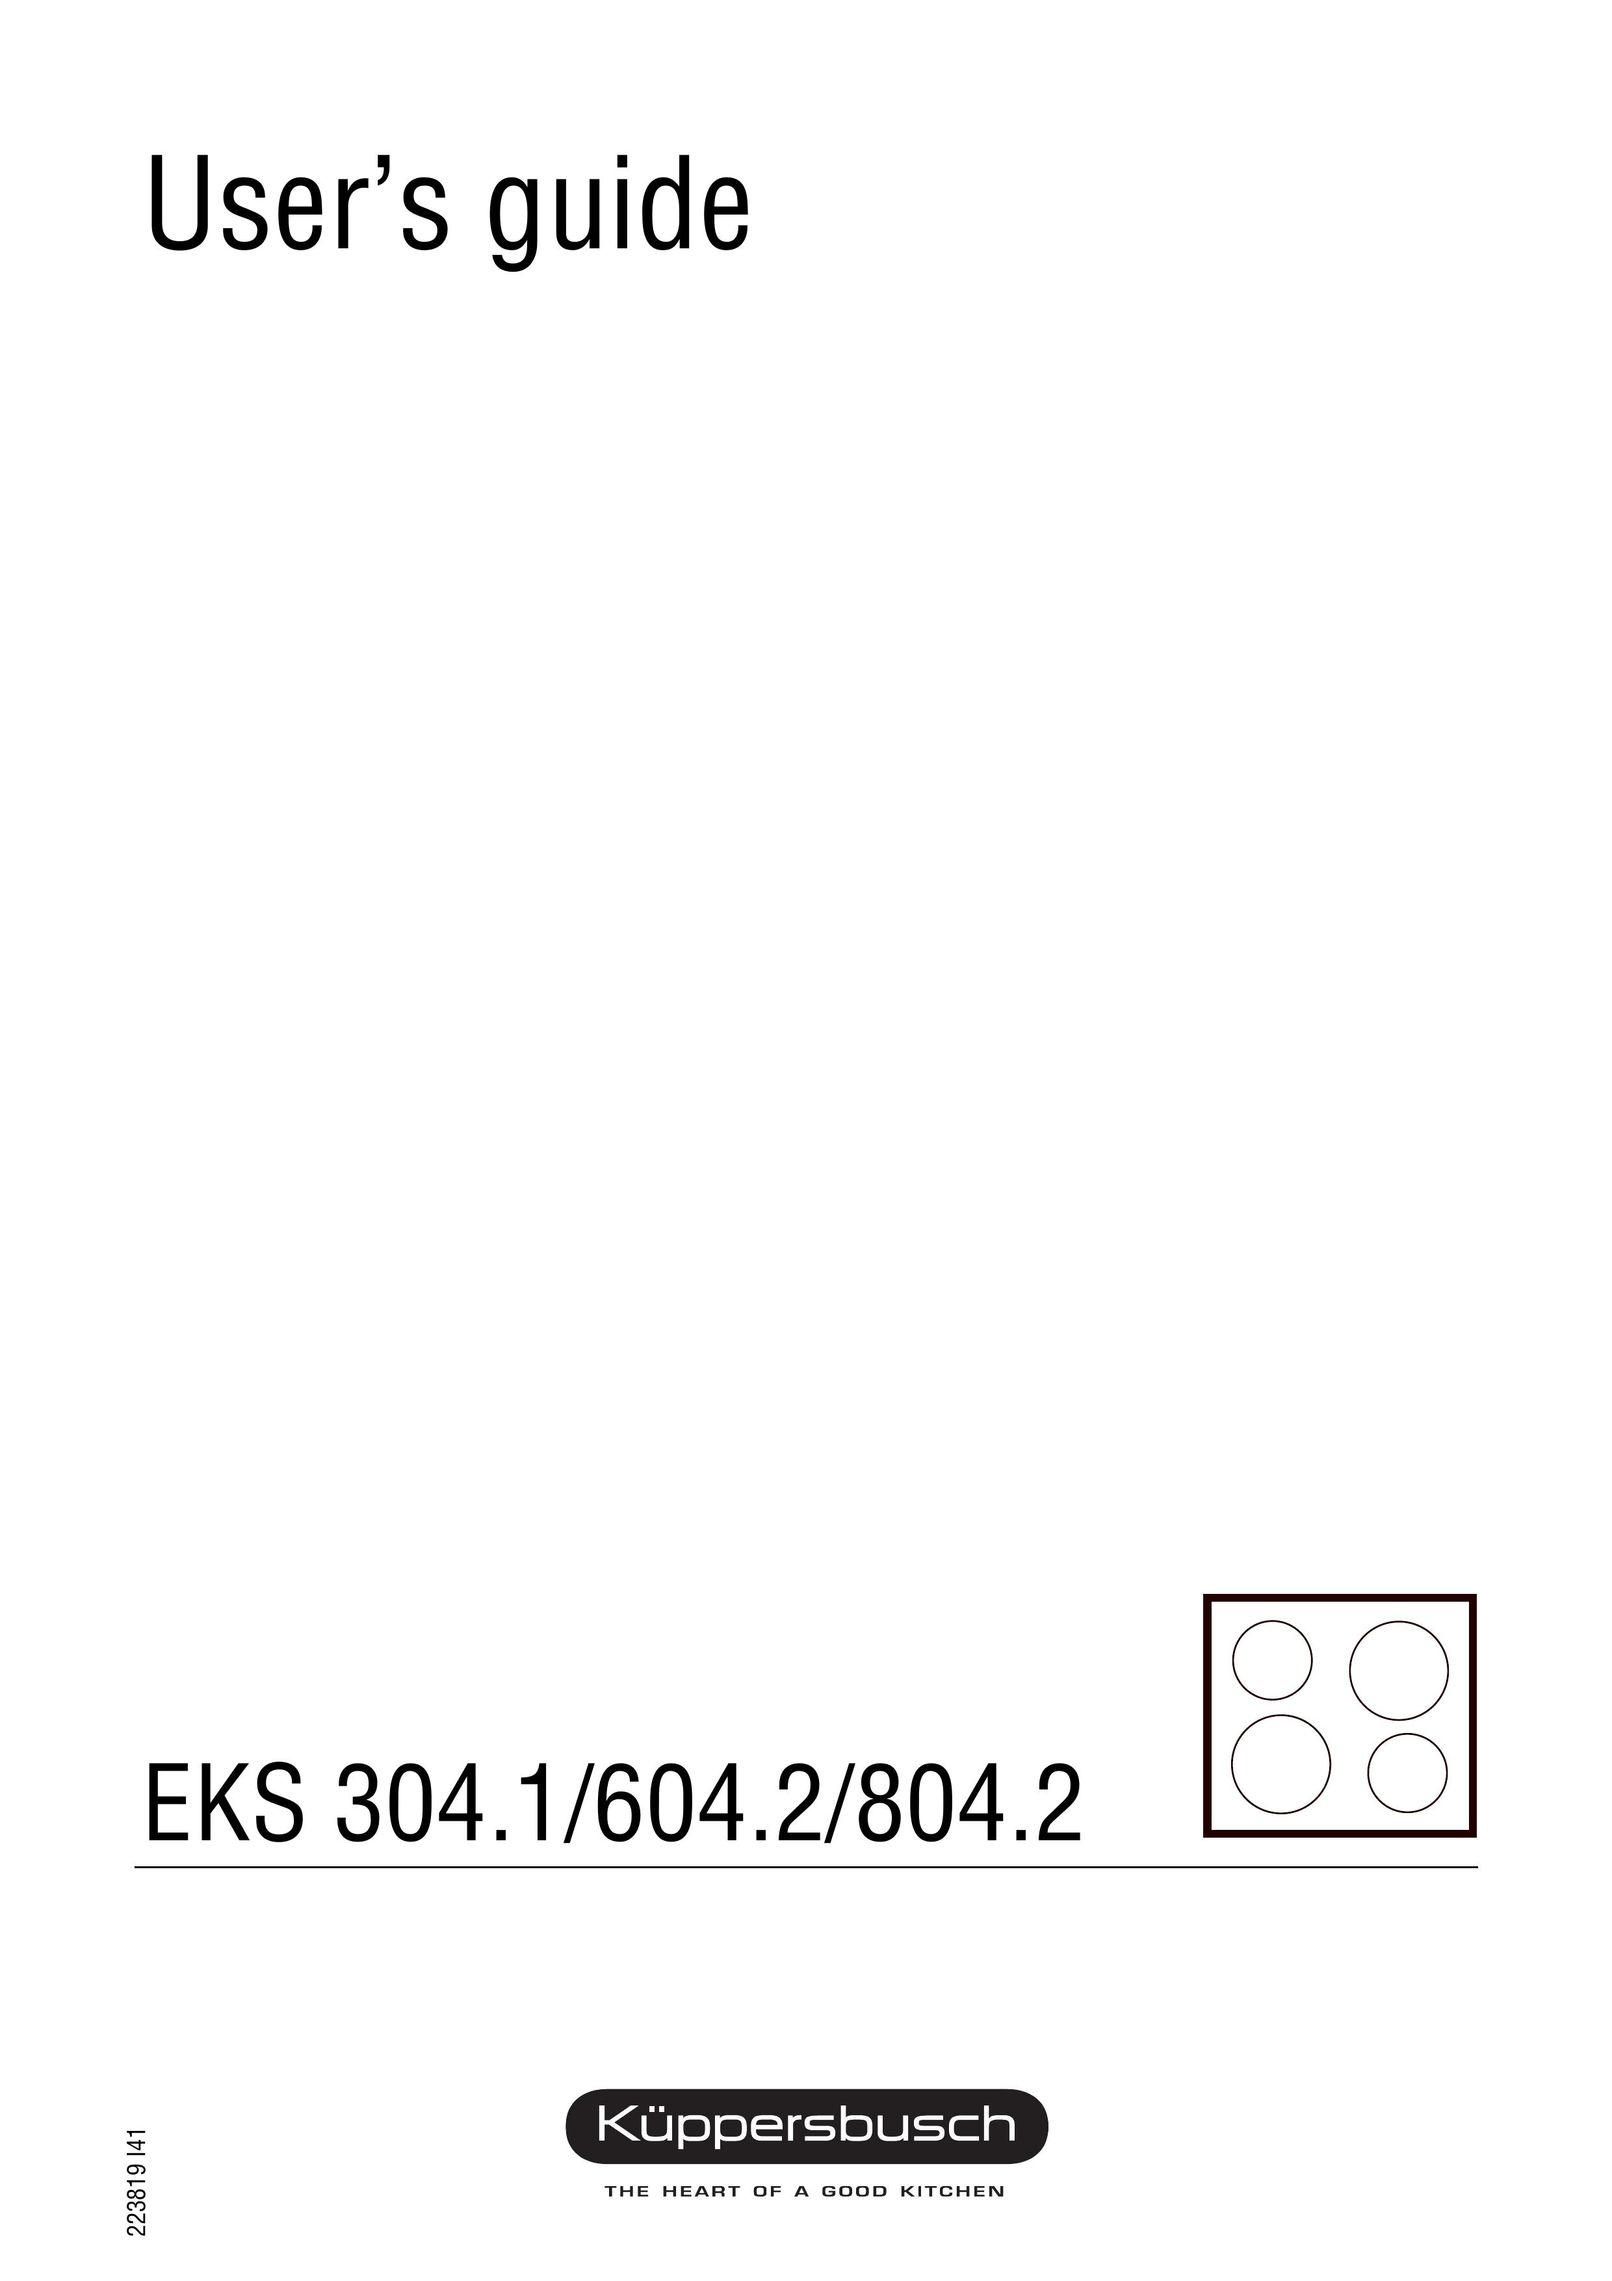 Kuppersbusch USA EKS 304.1 Oven User Manual